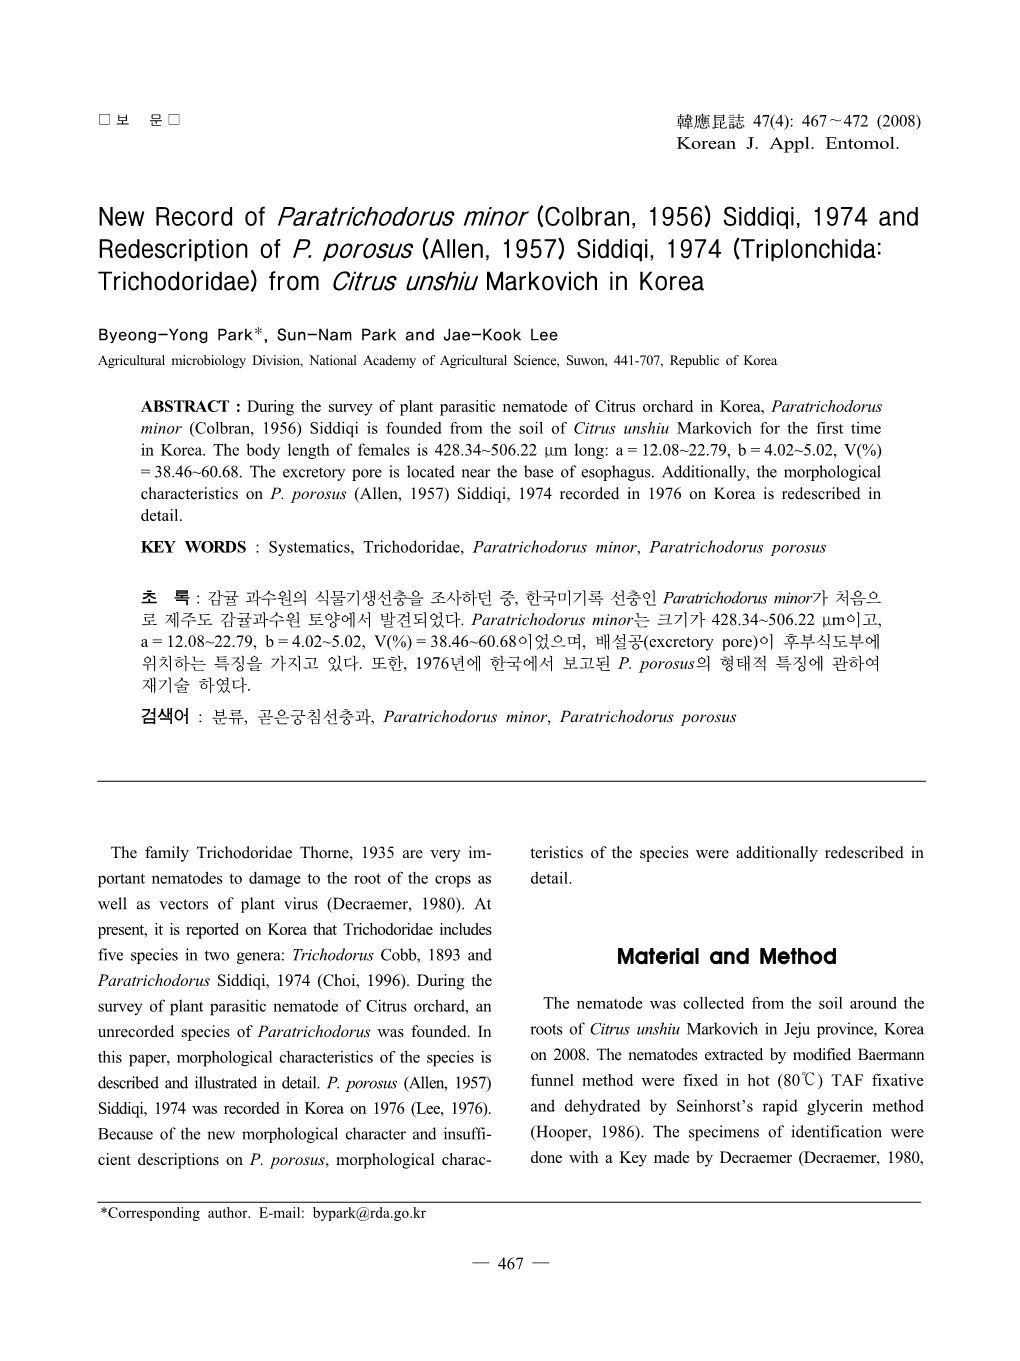 New Record of Paratrichodorus Minor (Colbran, 1956) Siddiqi, 1974 and Redescription of P